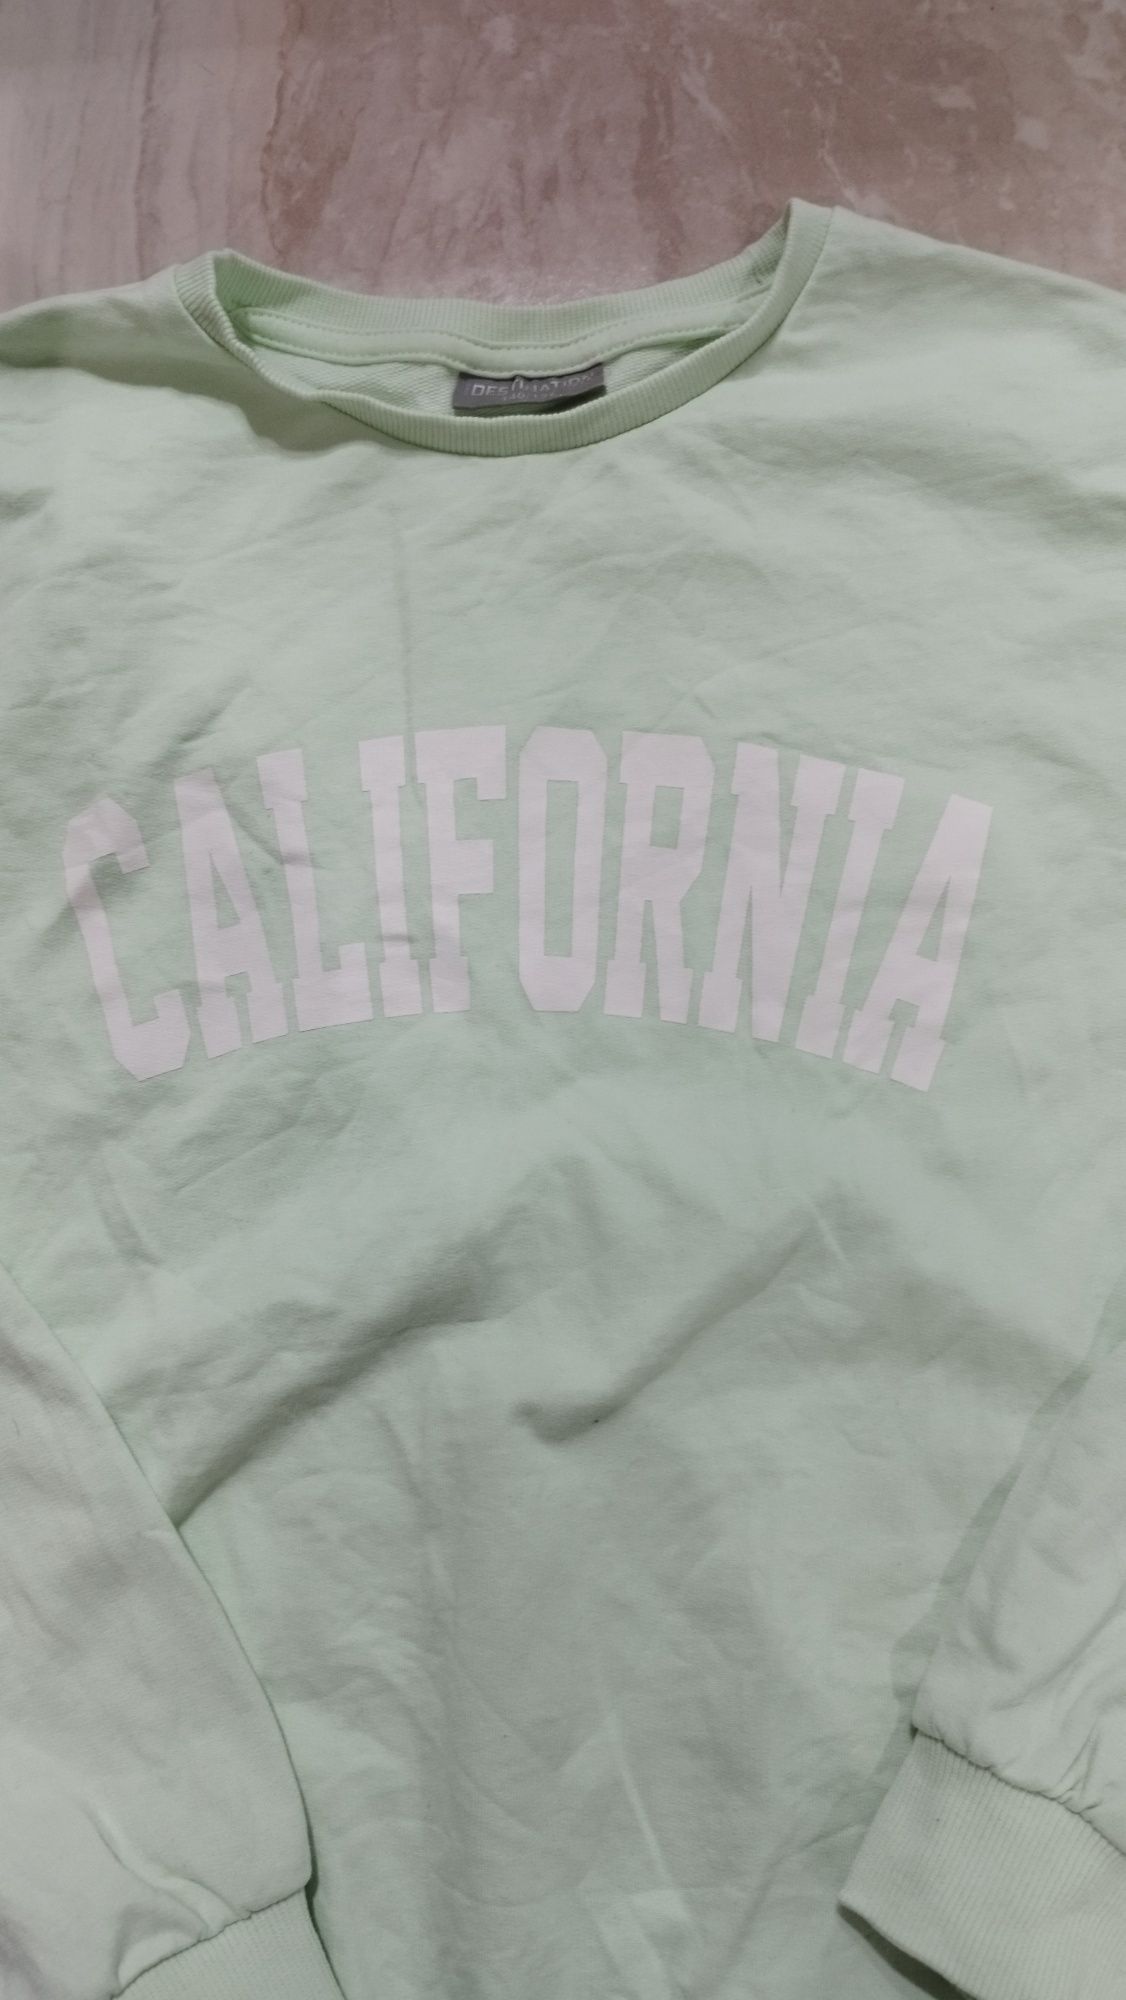 Bluza z napisem CALIFORNIA